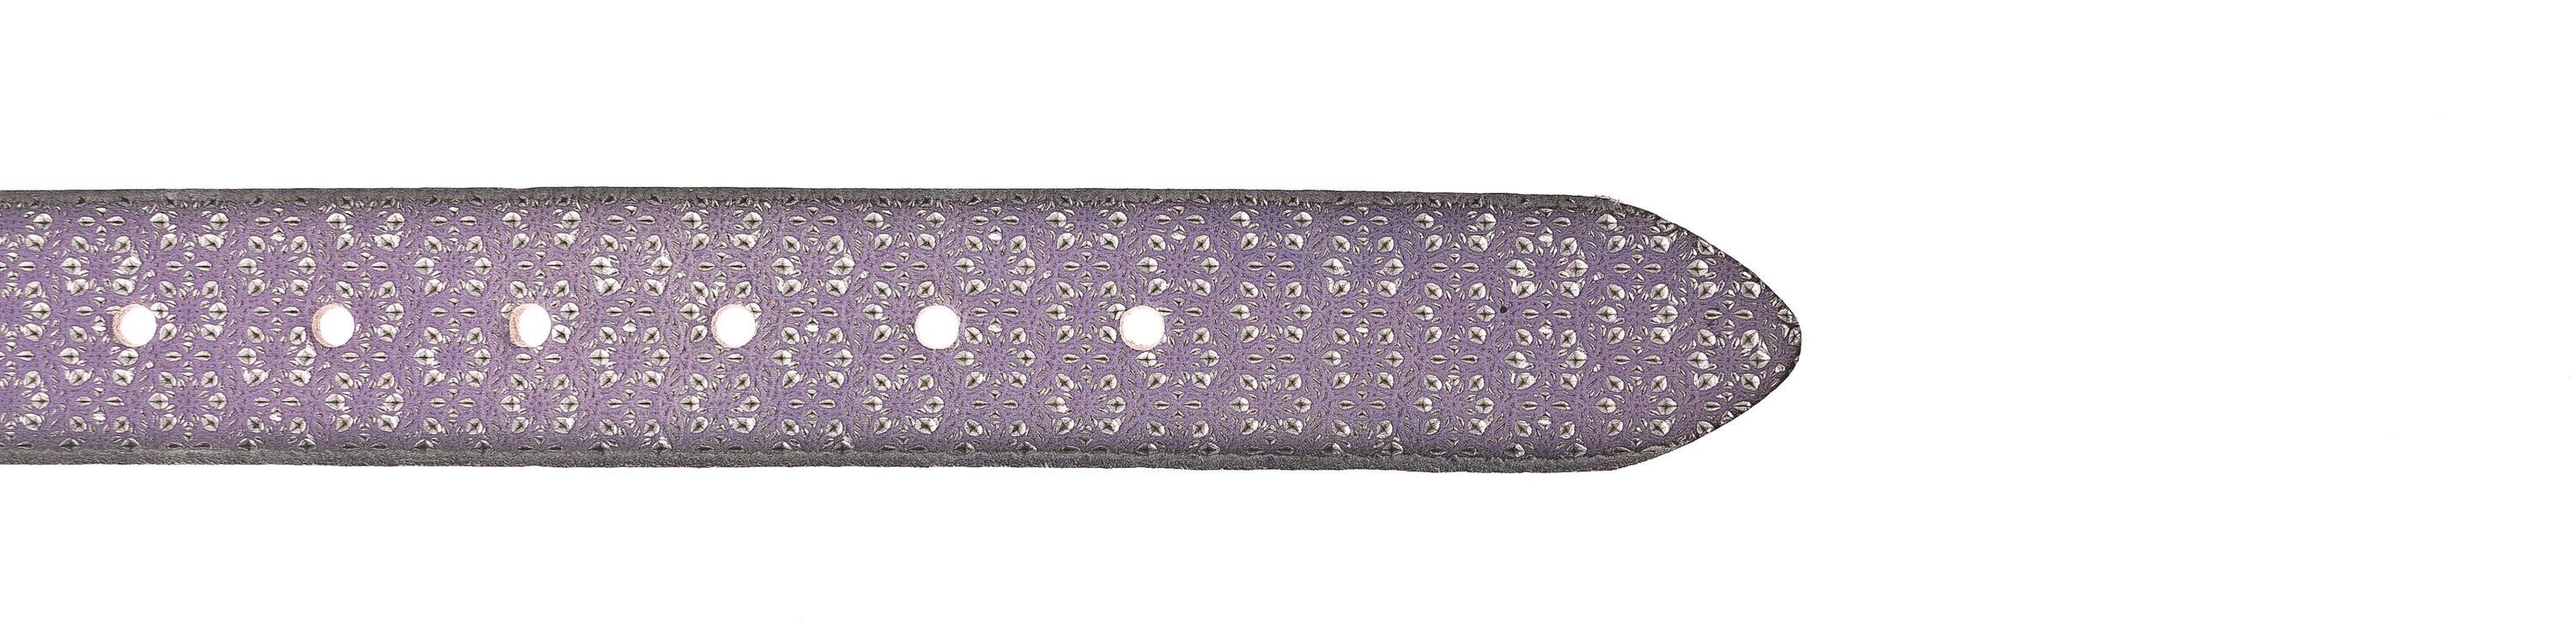 b.belt Prägung maurischer Ledergürtel - silber lila metallic mit Mara